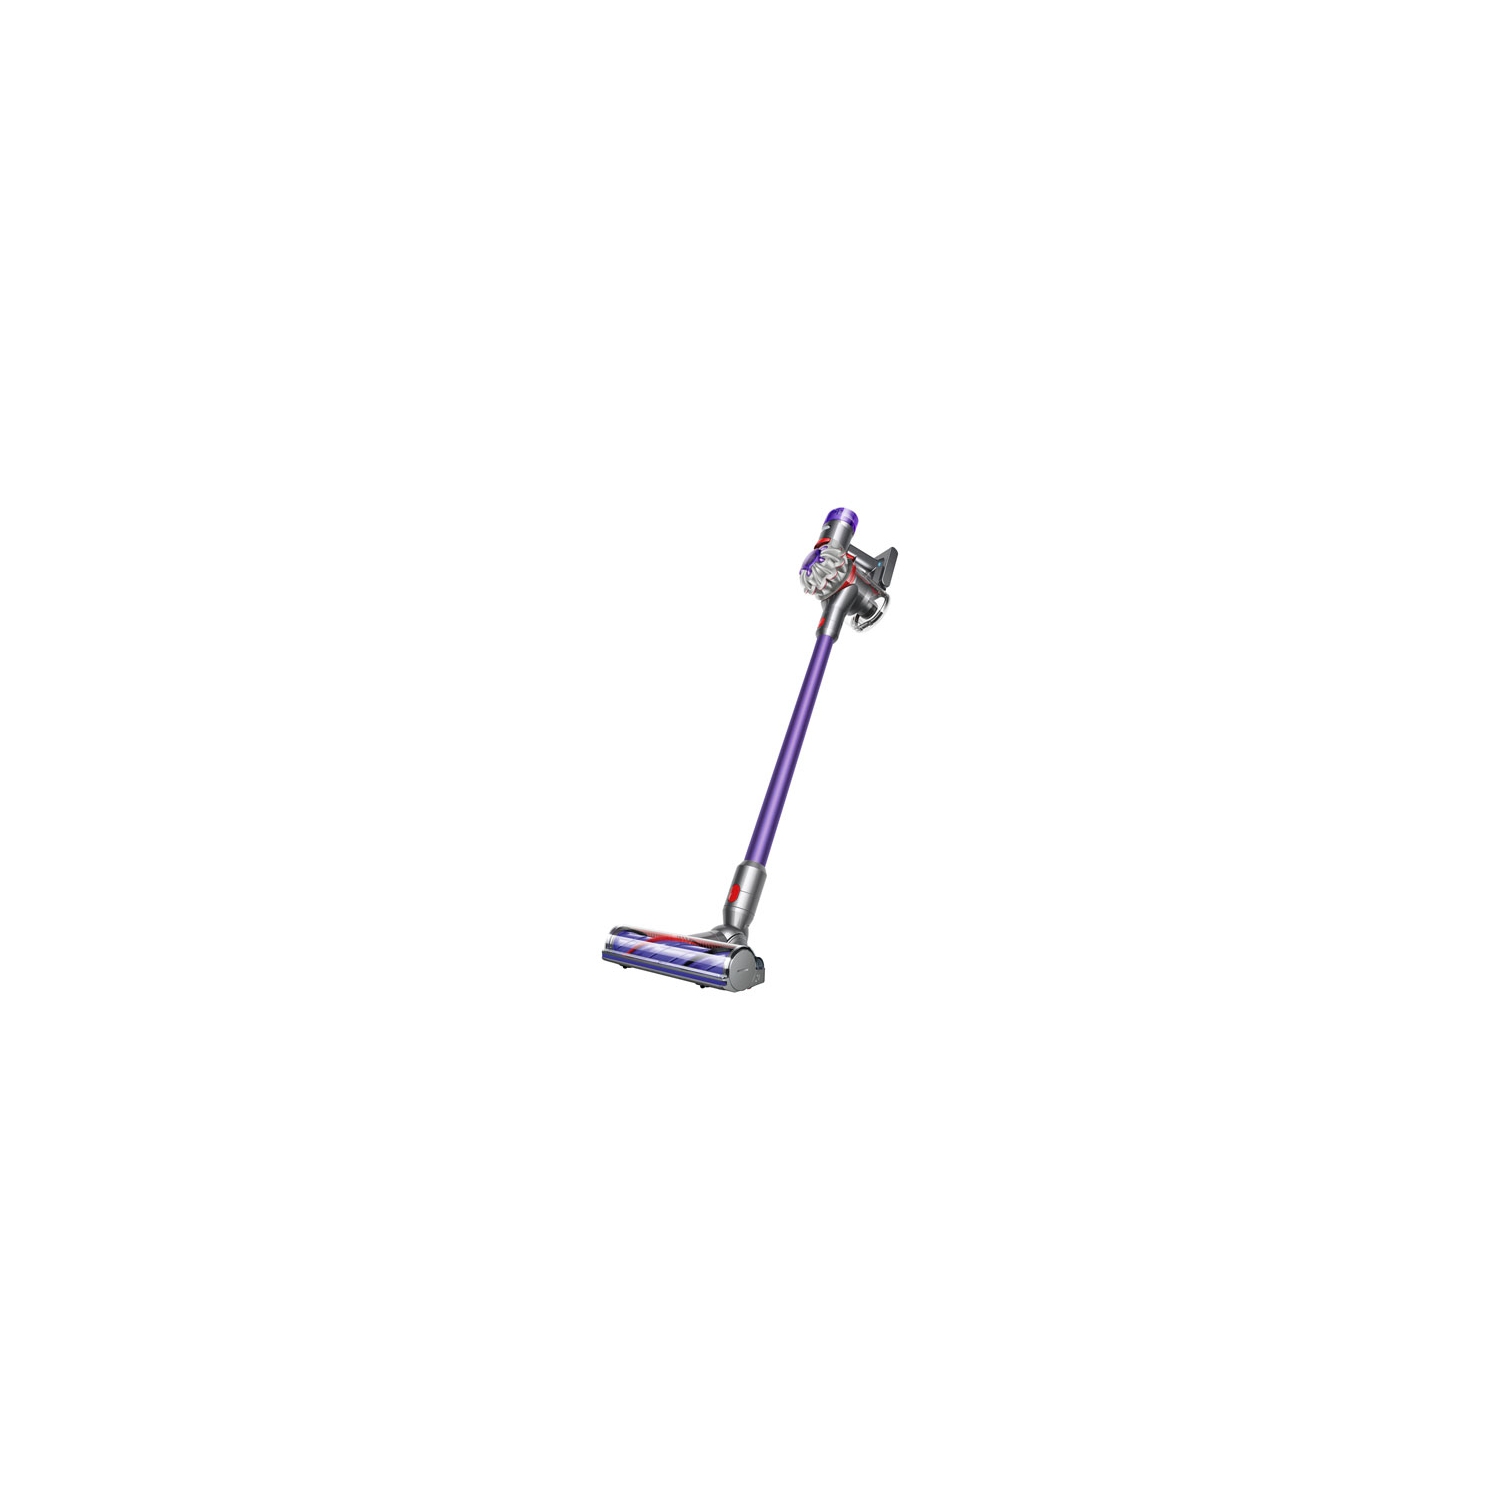 Refurbished (Excellent) - Dyson V8 Origin Plus Cordless Stick Vacuum - Silver/Purple